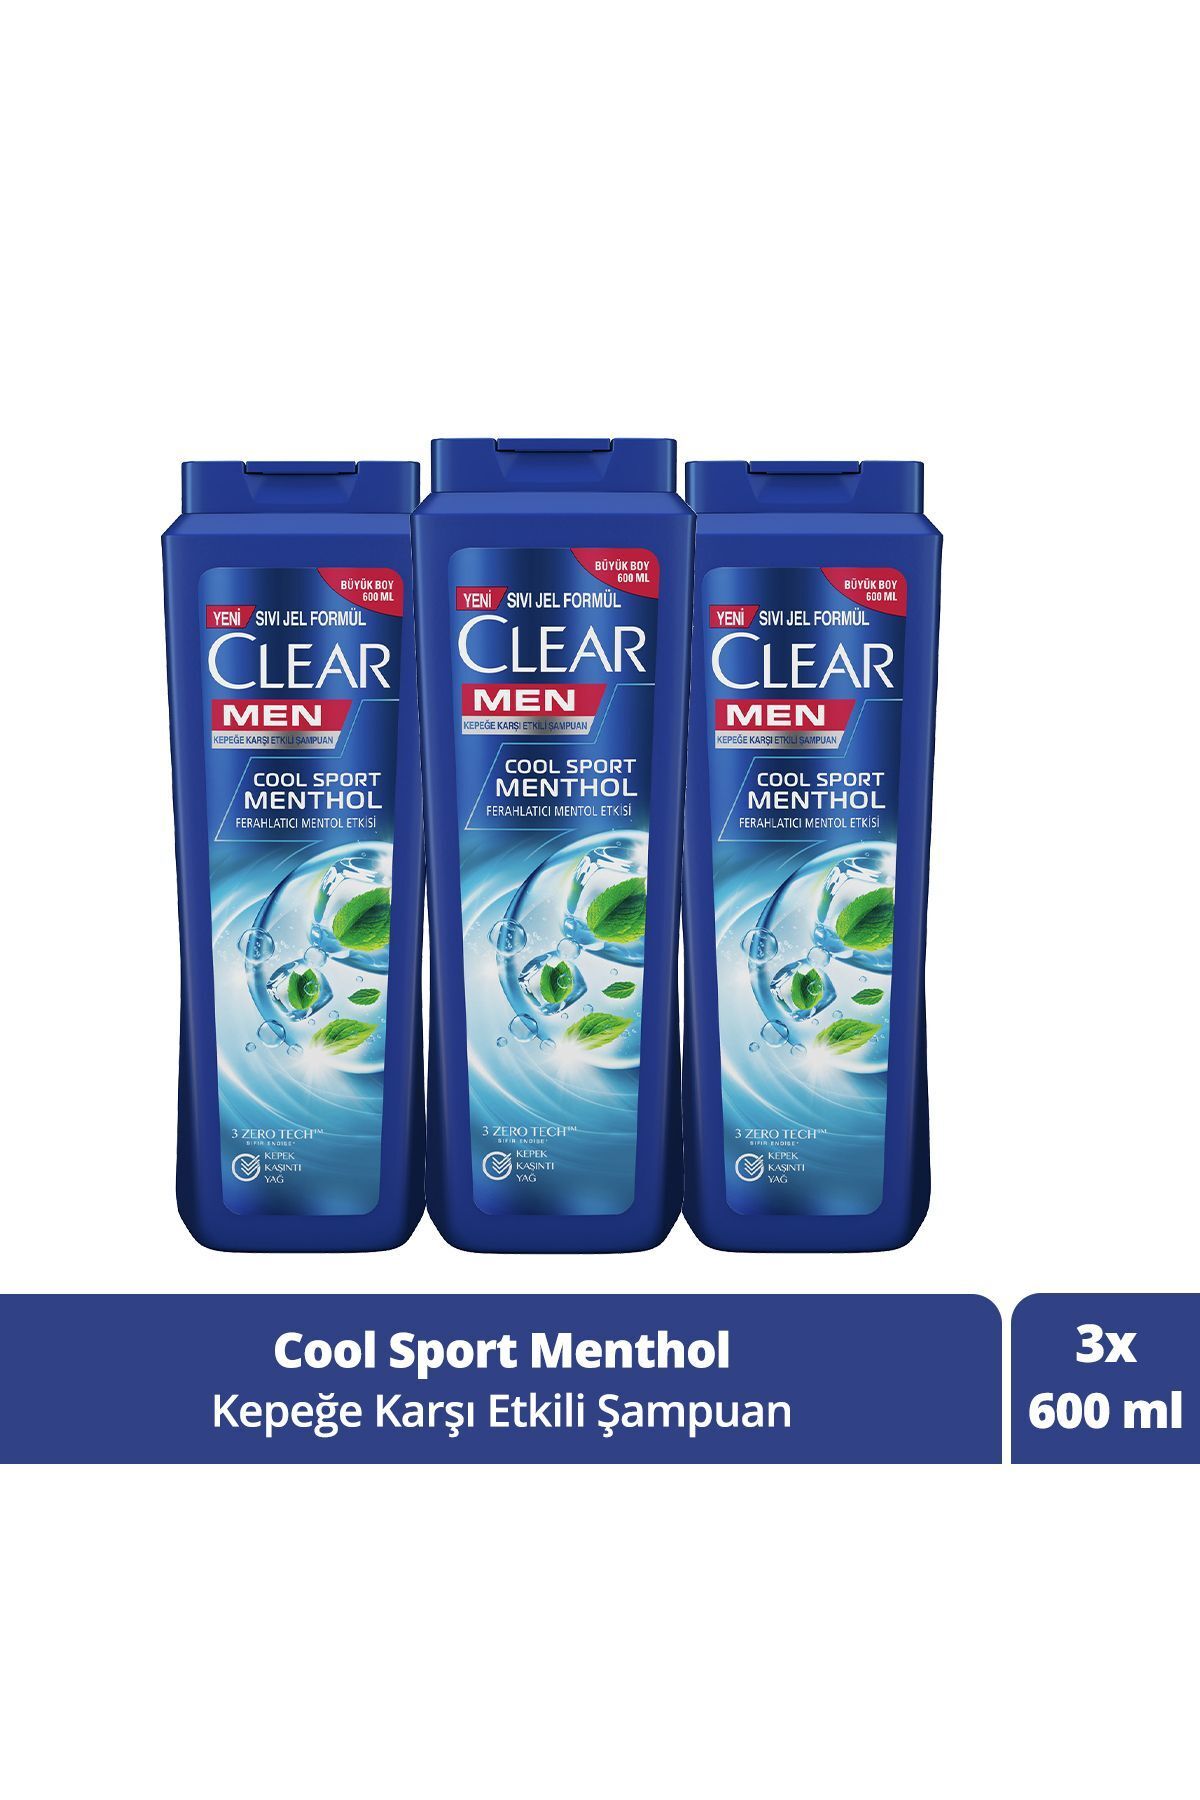 Clear Men Kepeğe Karşı Etkili Saç Bakım Şampuanı Cool Sport Menthol Ferahlatıcı Mentol 600 ml X3